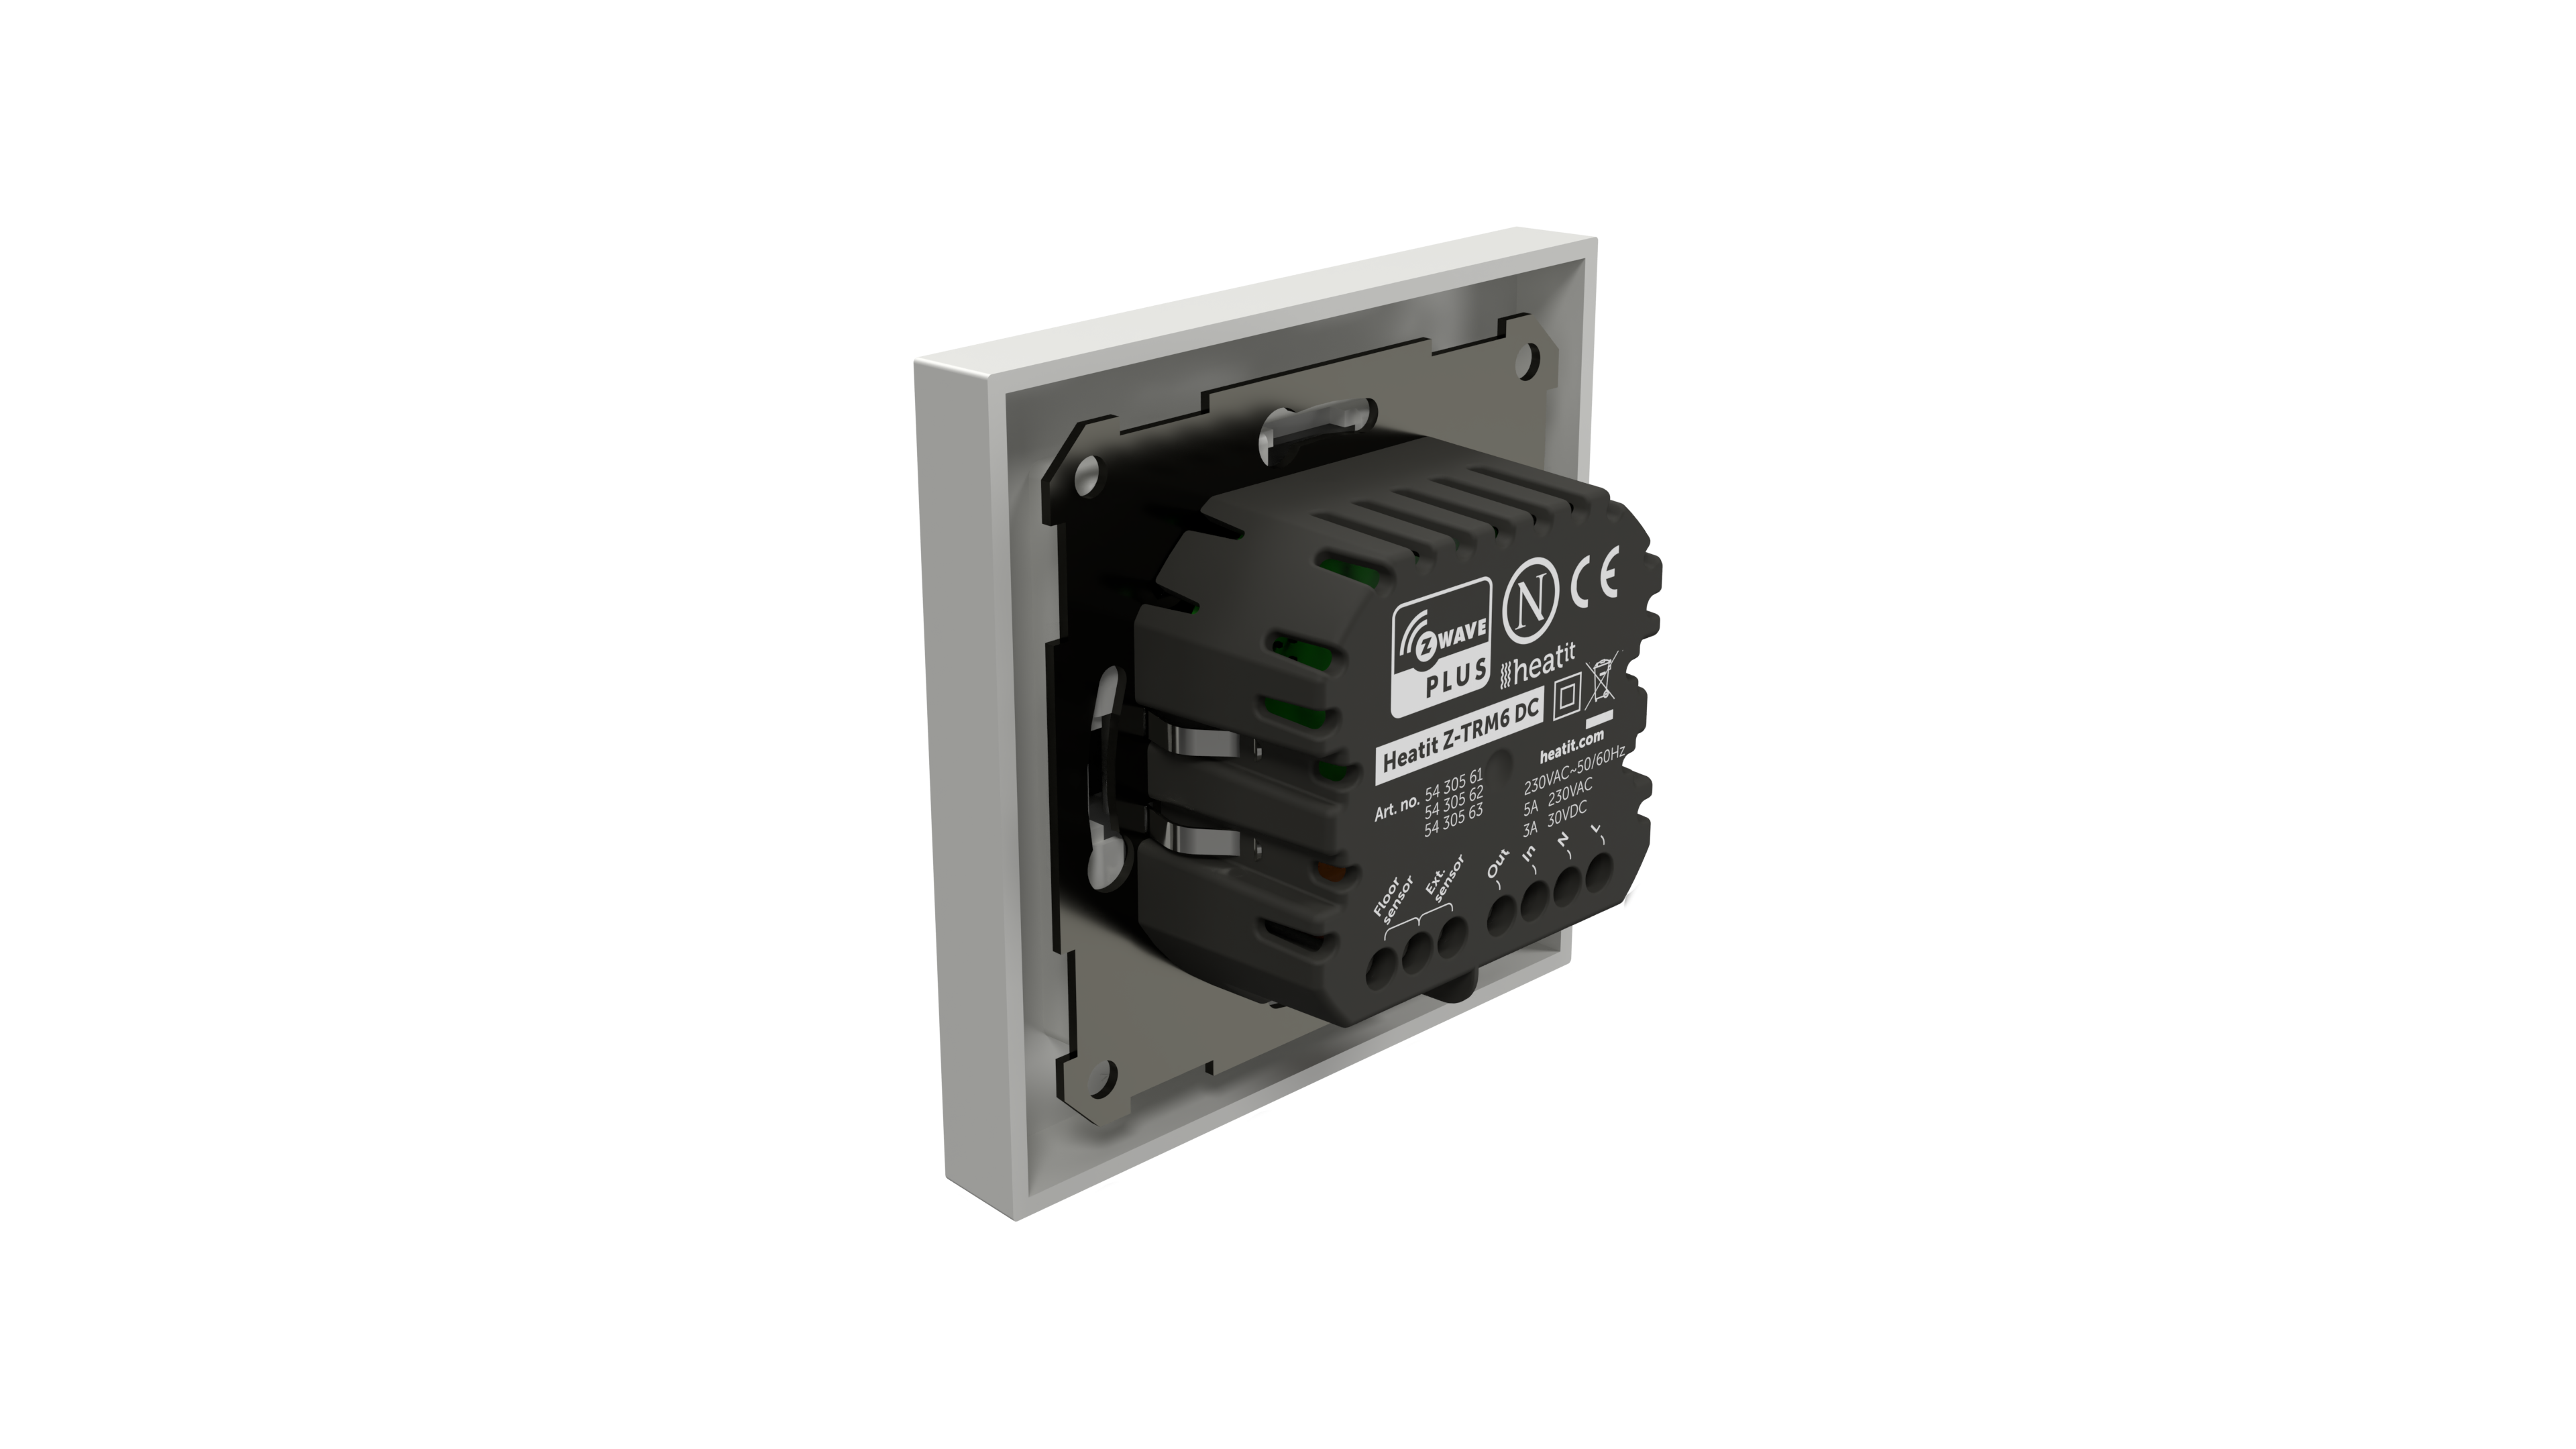 Heatit Z-TRM6 DC thermostat White RAL 9003